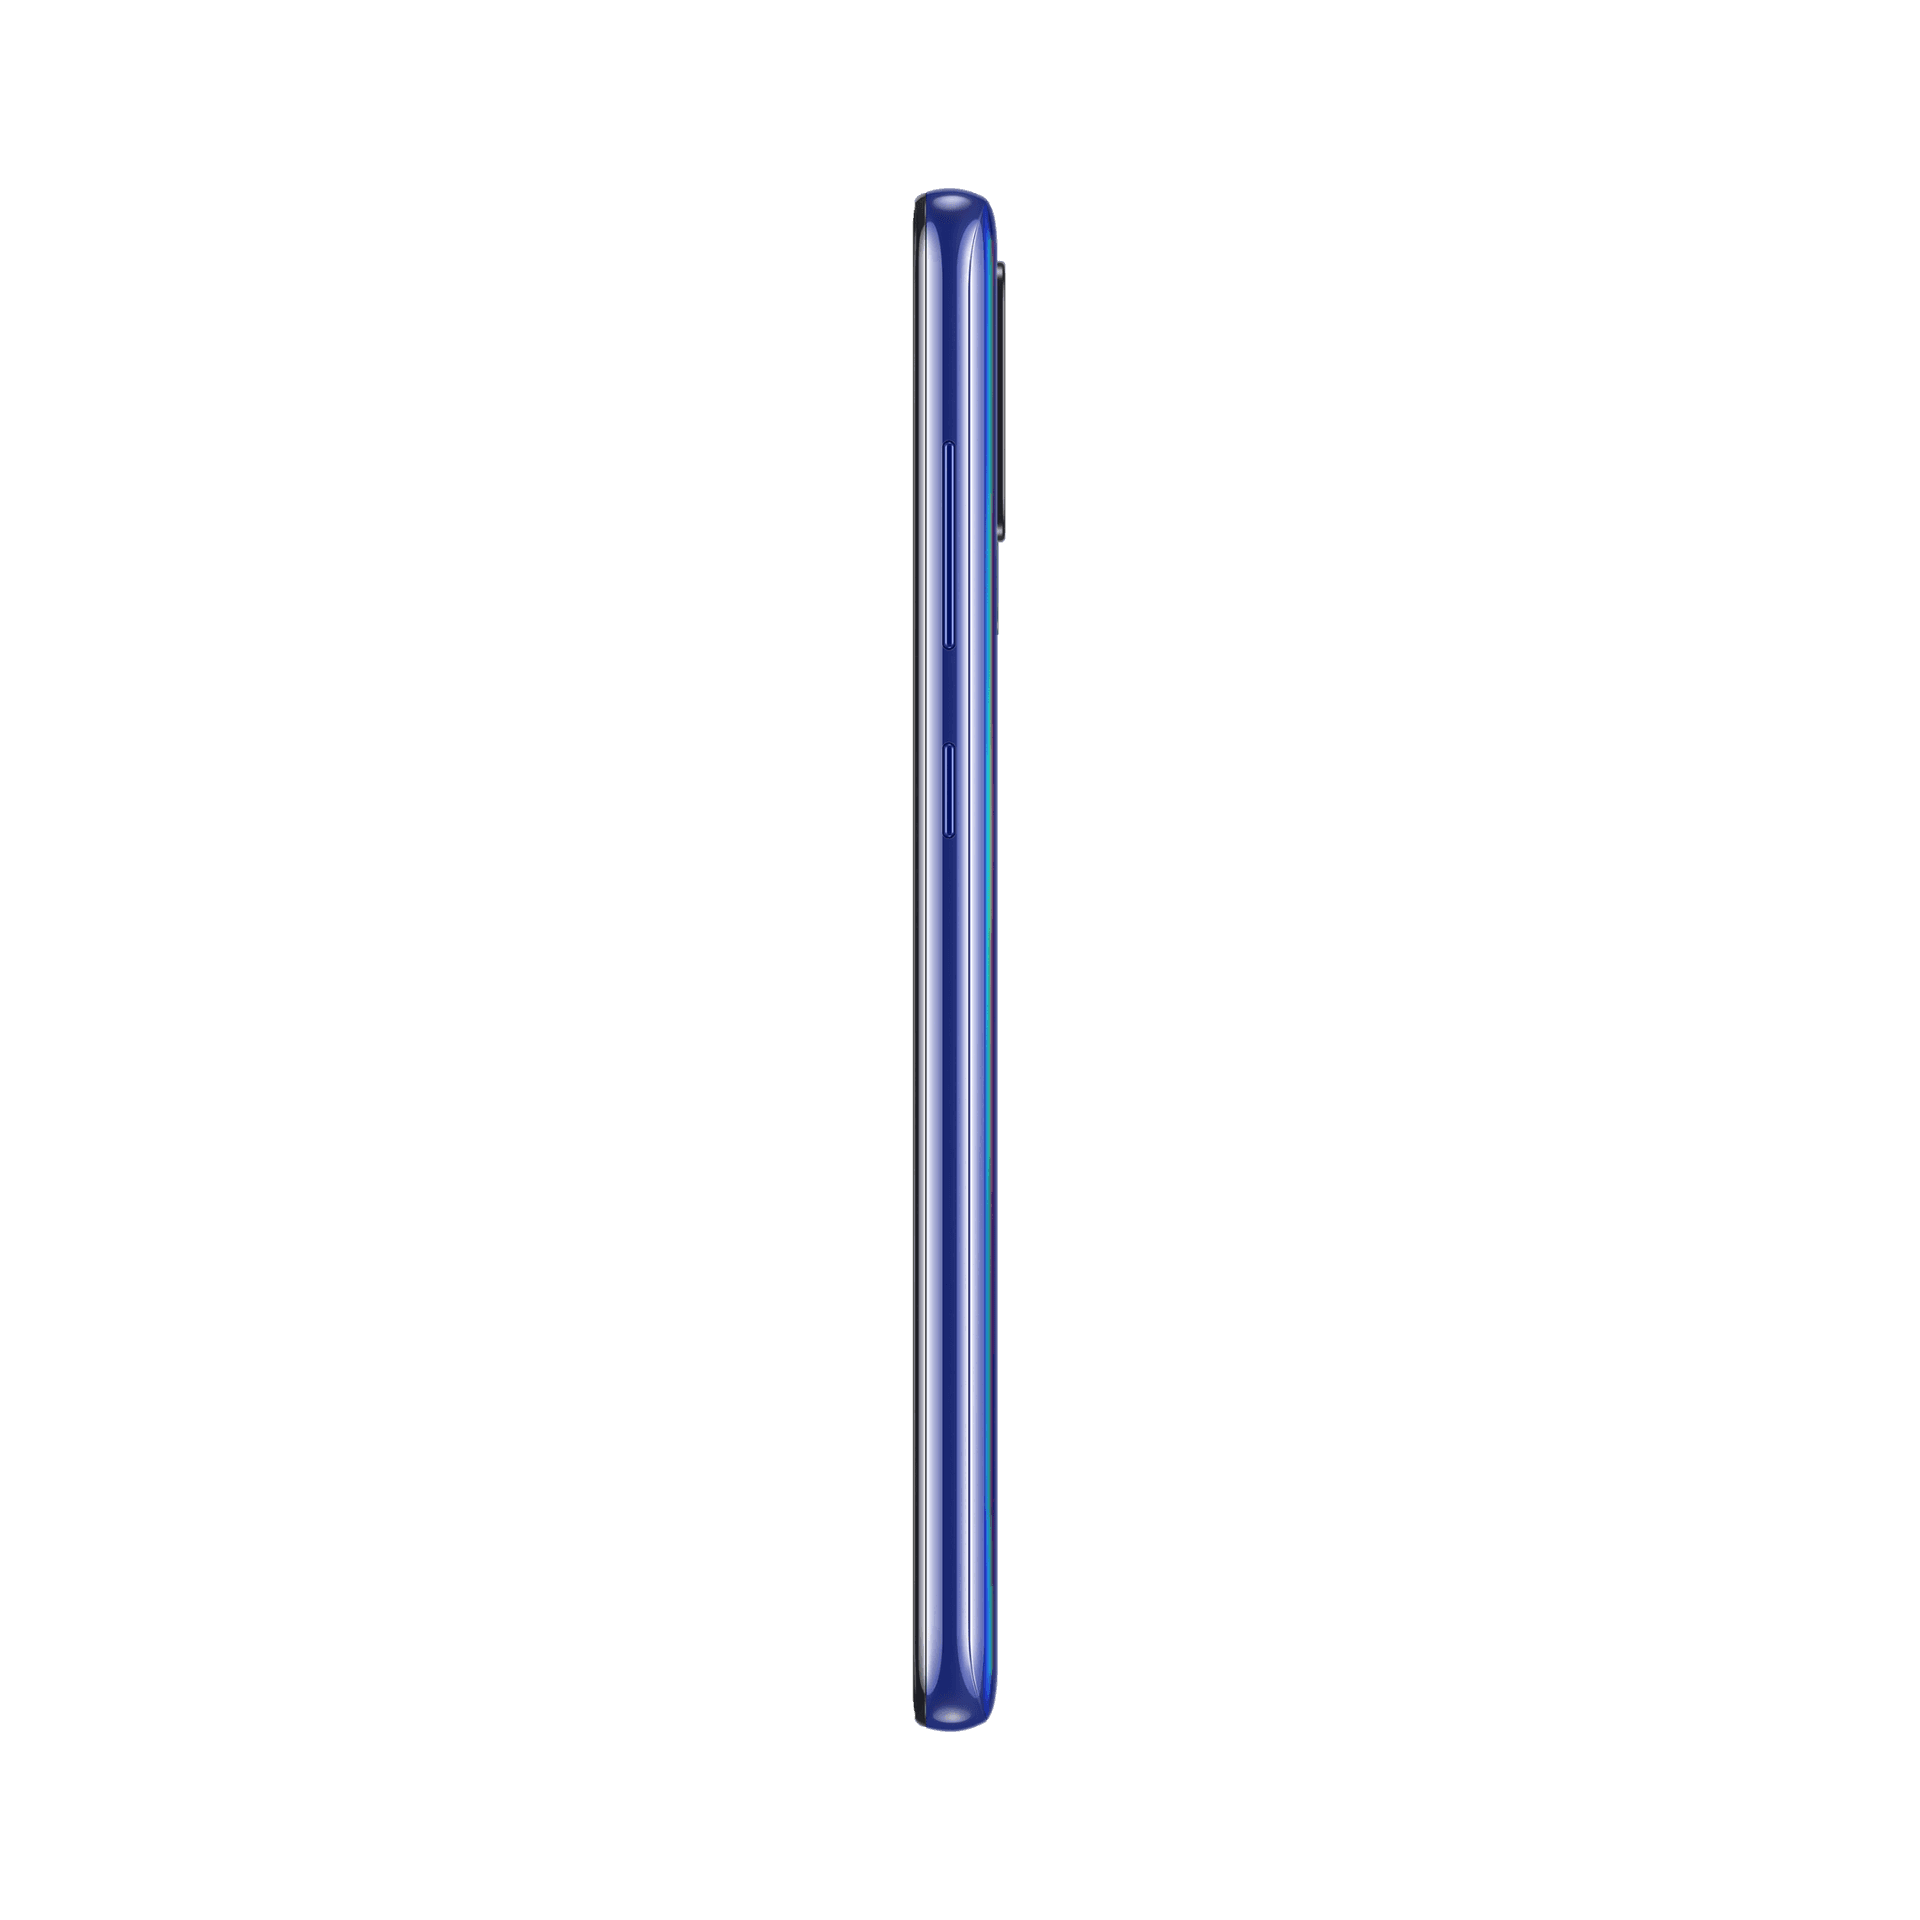 Samsung Galaxy A21s - 128 GB - Mavi